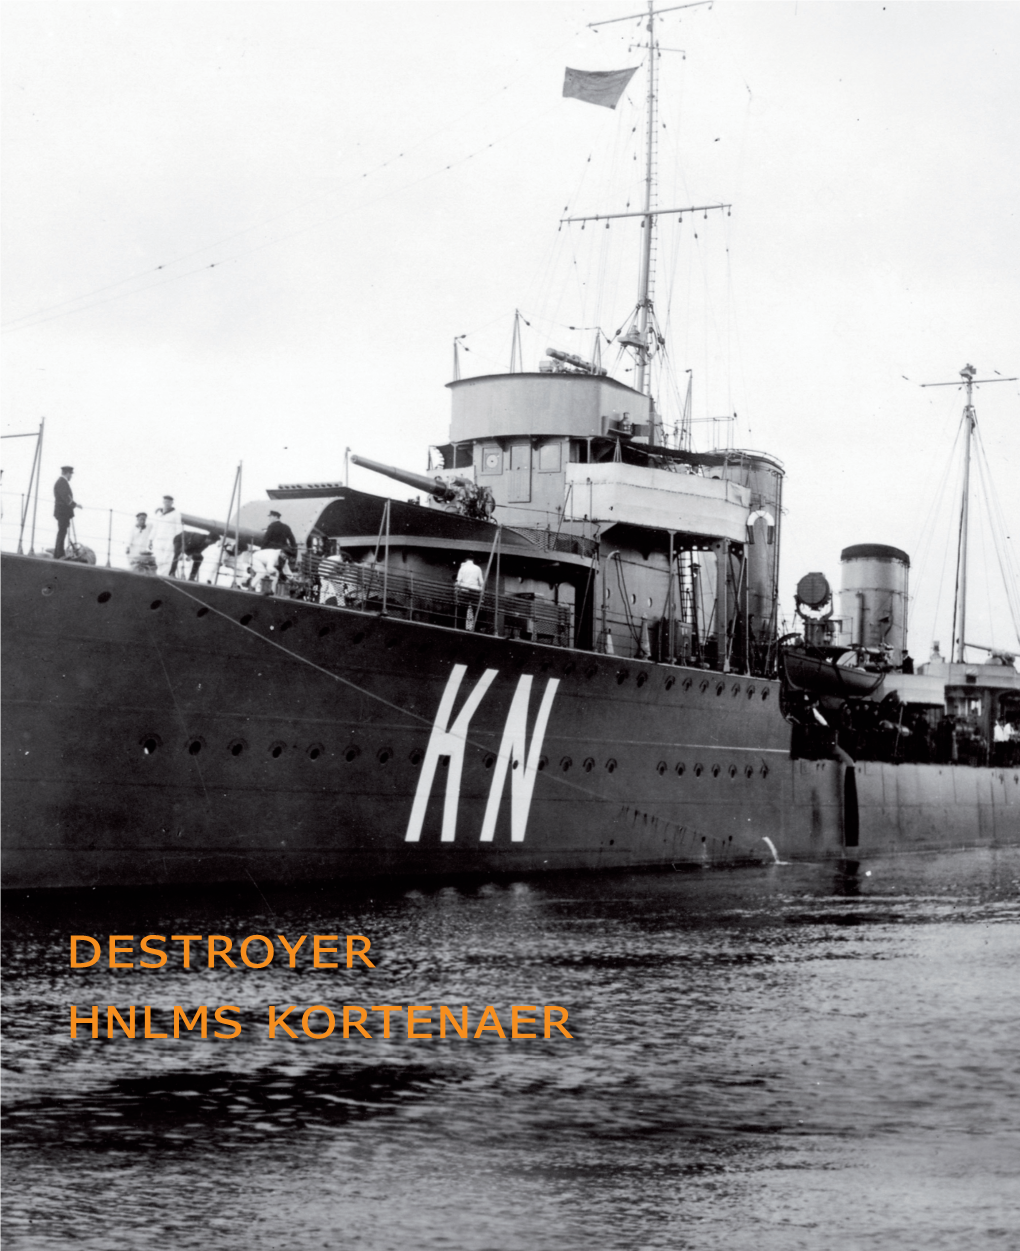 Destroyer Hnlms Kortenaer HNLMS Kortenaer